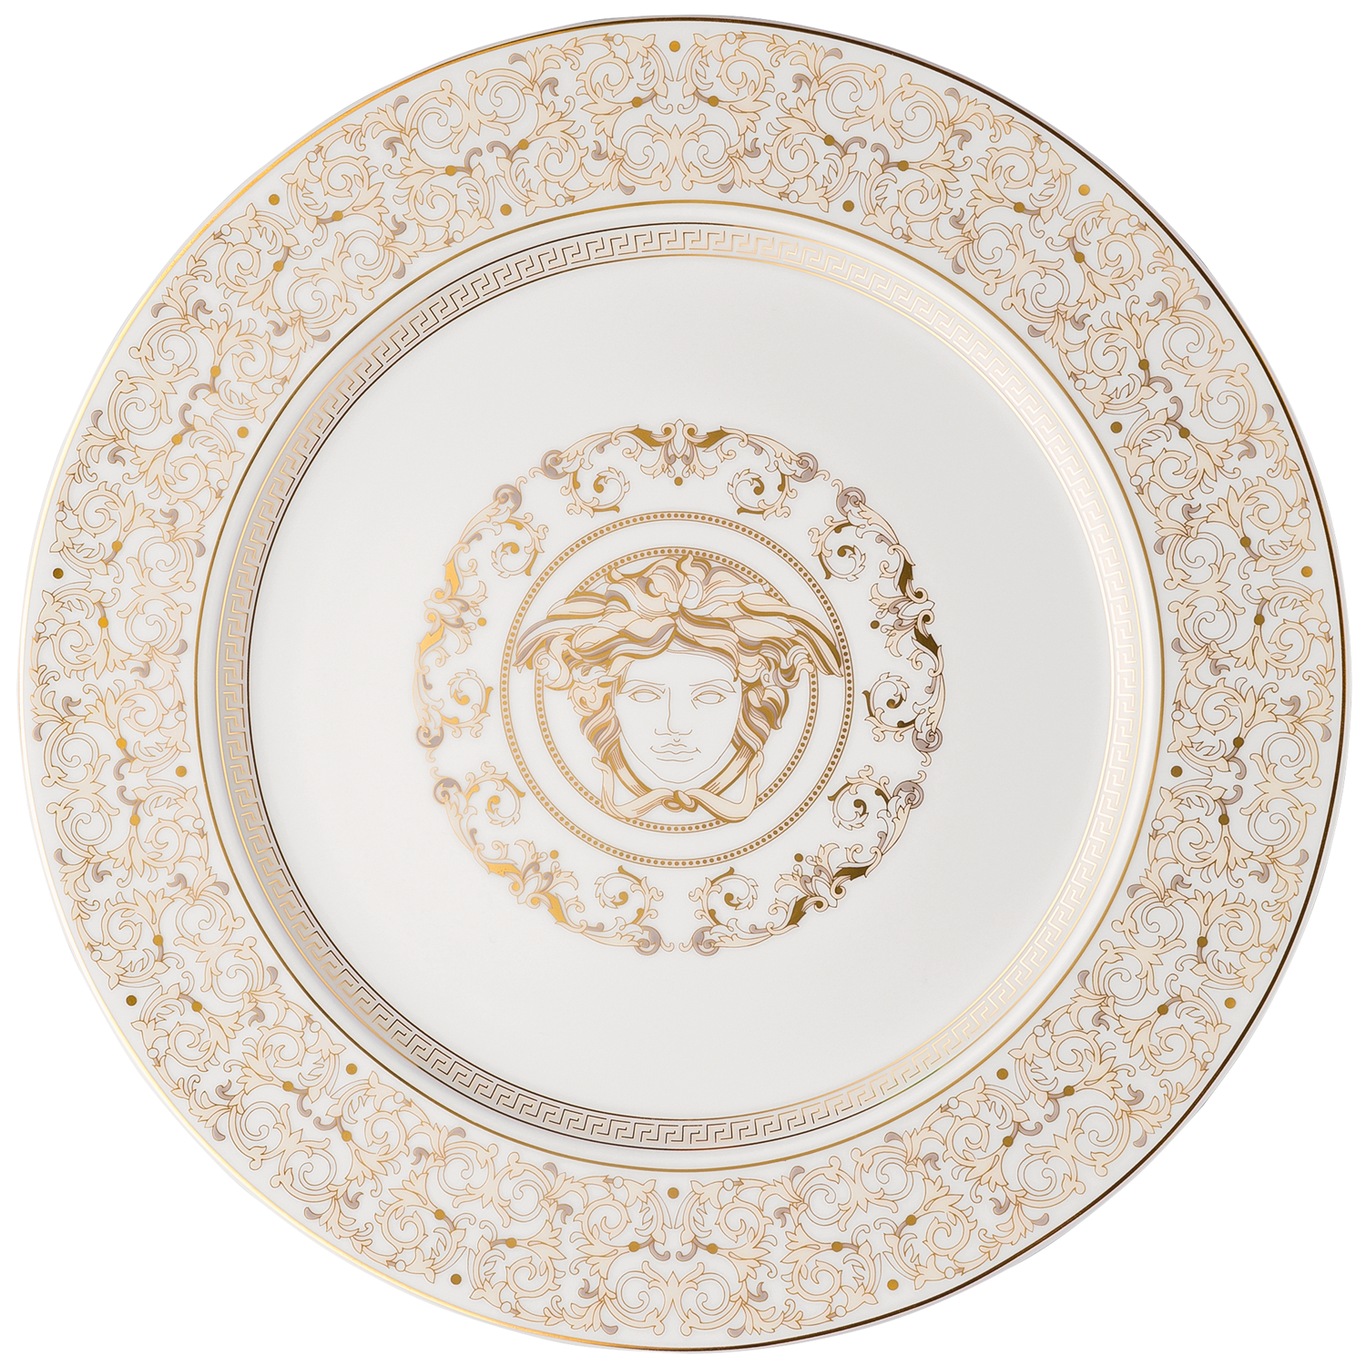 Medusa Gala Service Plate, 30 cm - Versace @ RoyalDesign